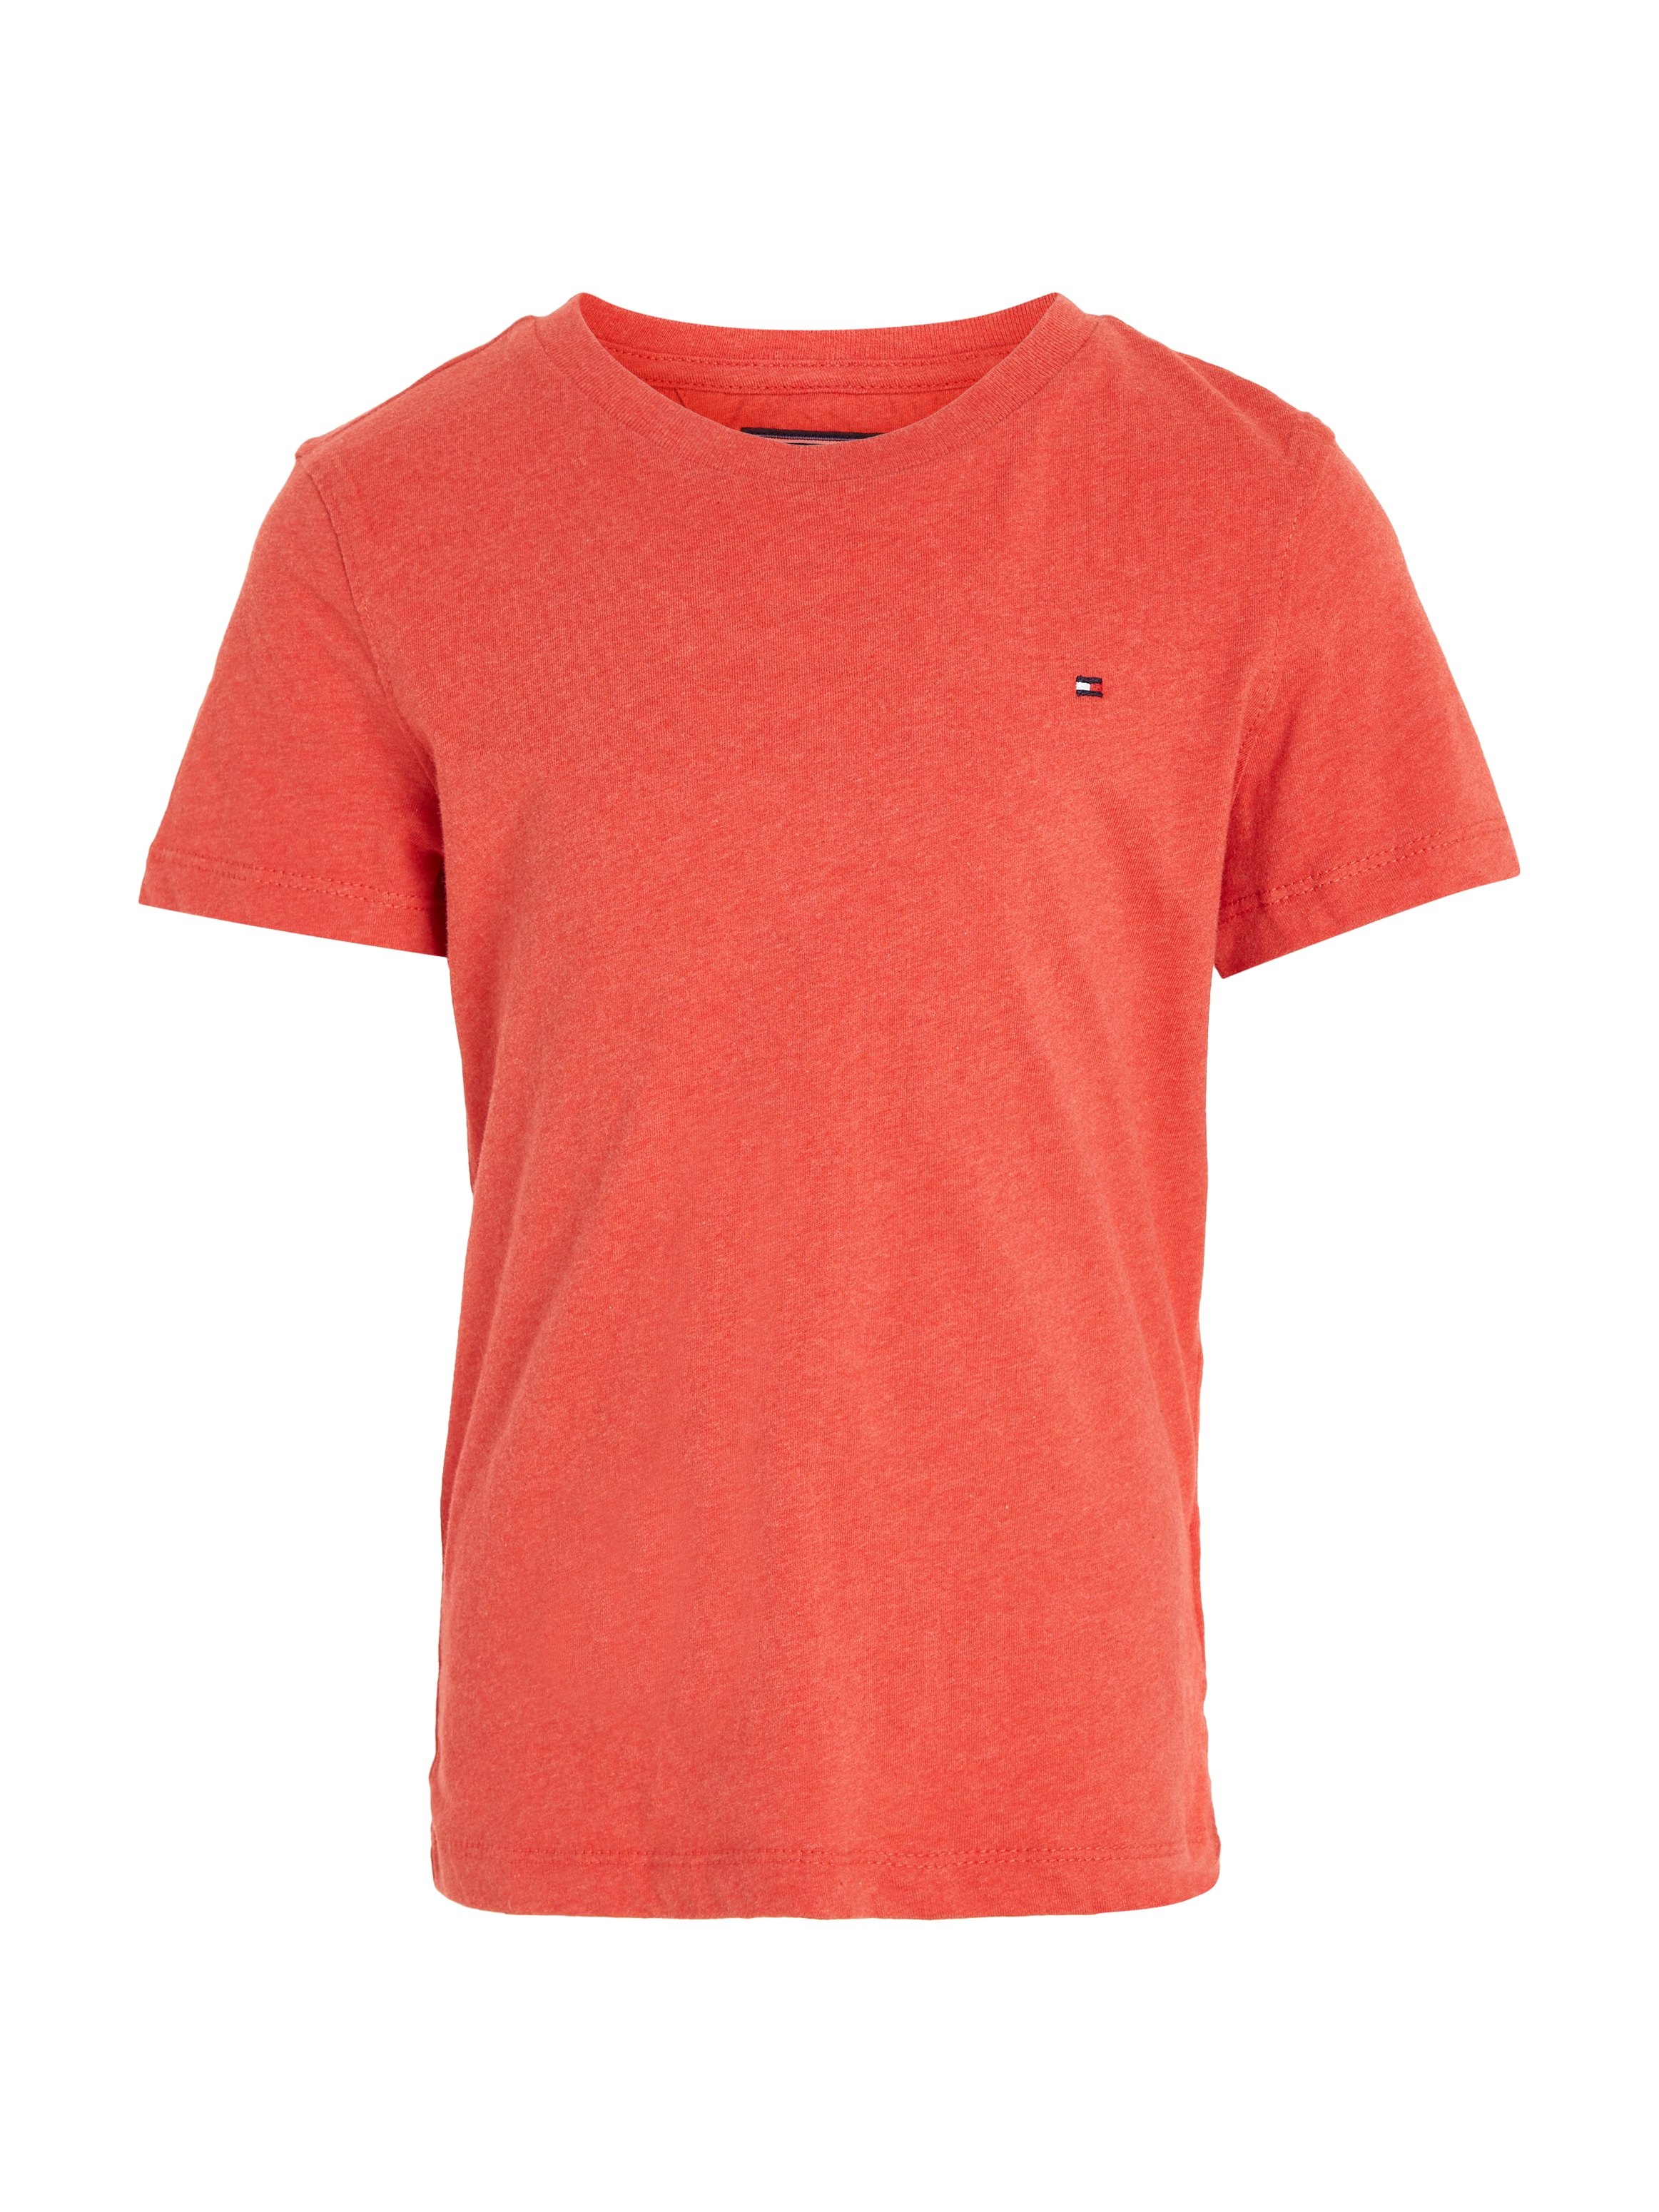 Tommy Hilfiger T-Shirt »BOYS BASIC bei CN KNIT« OTTO